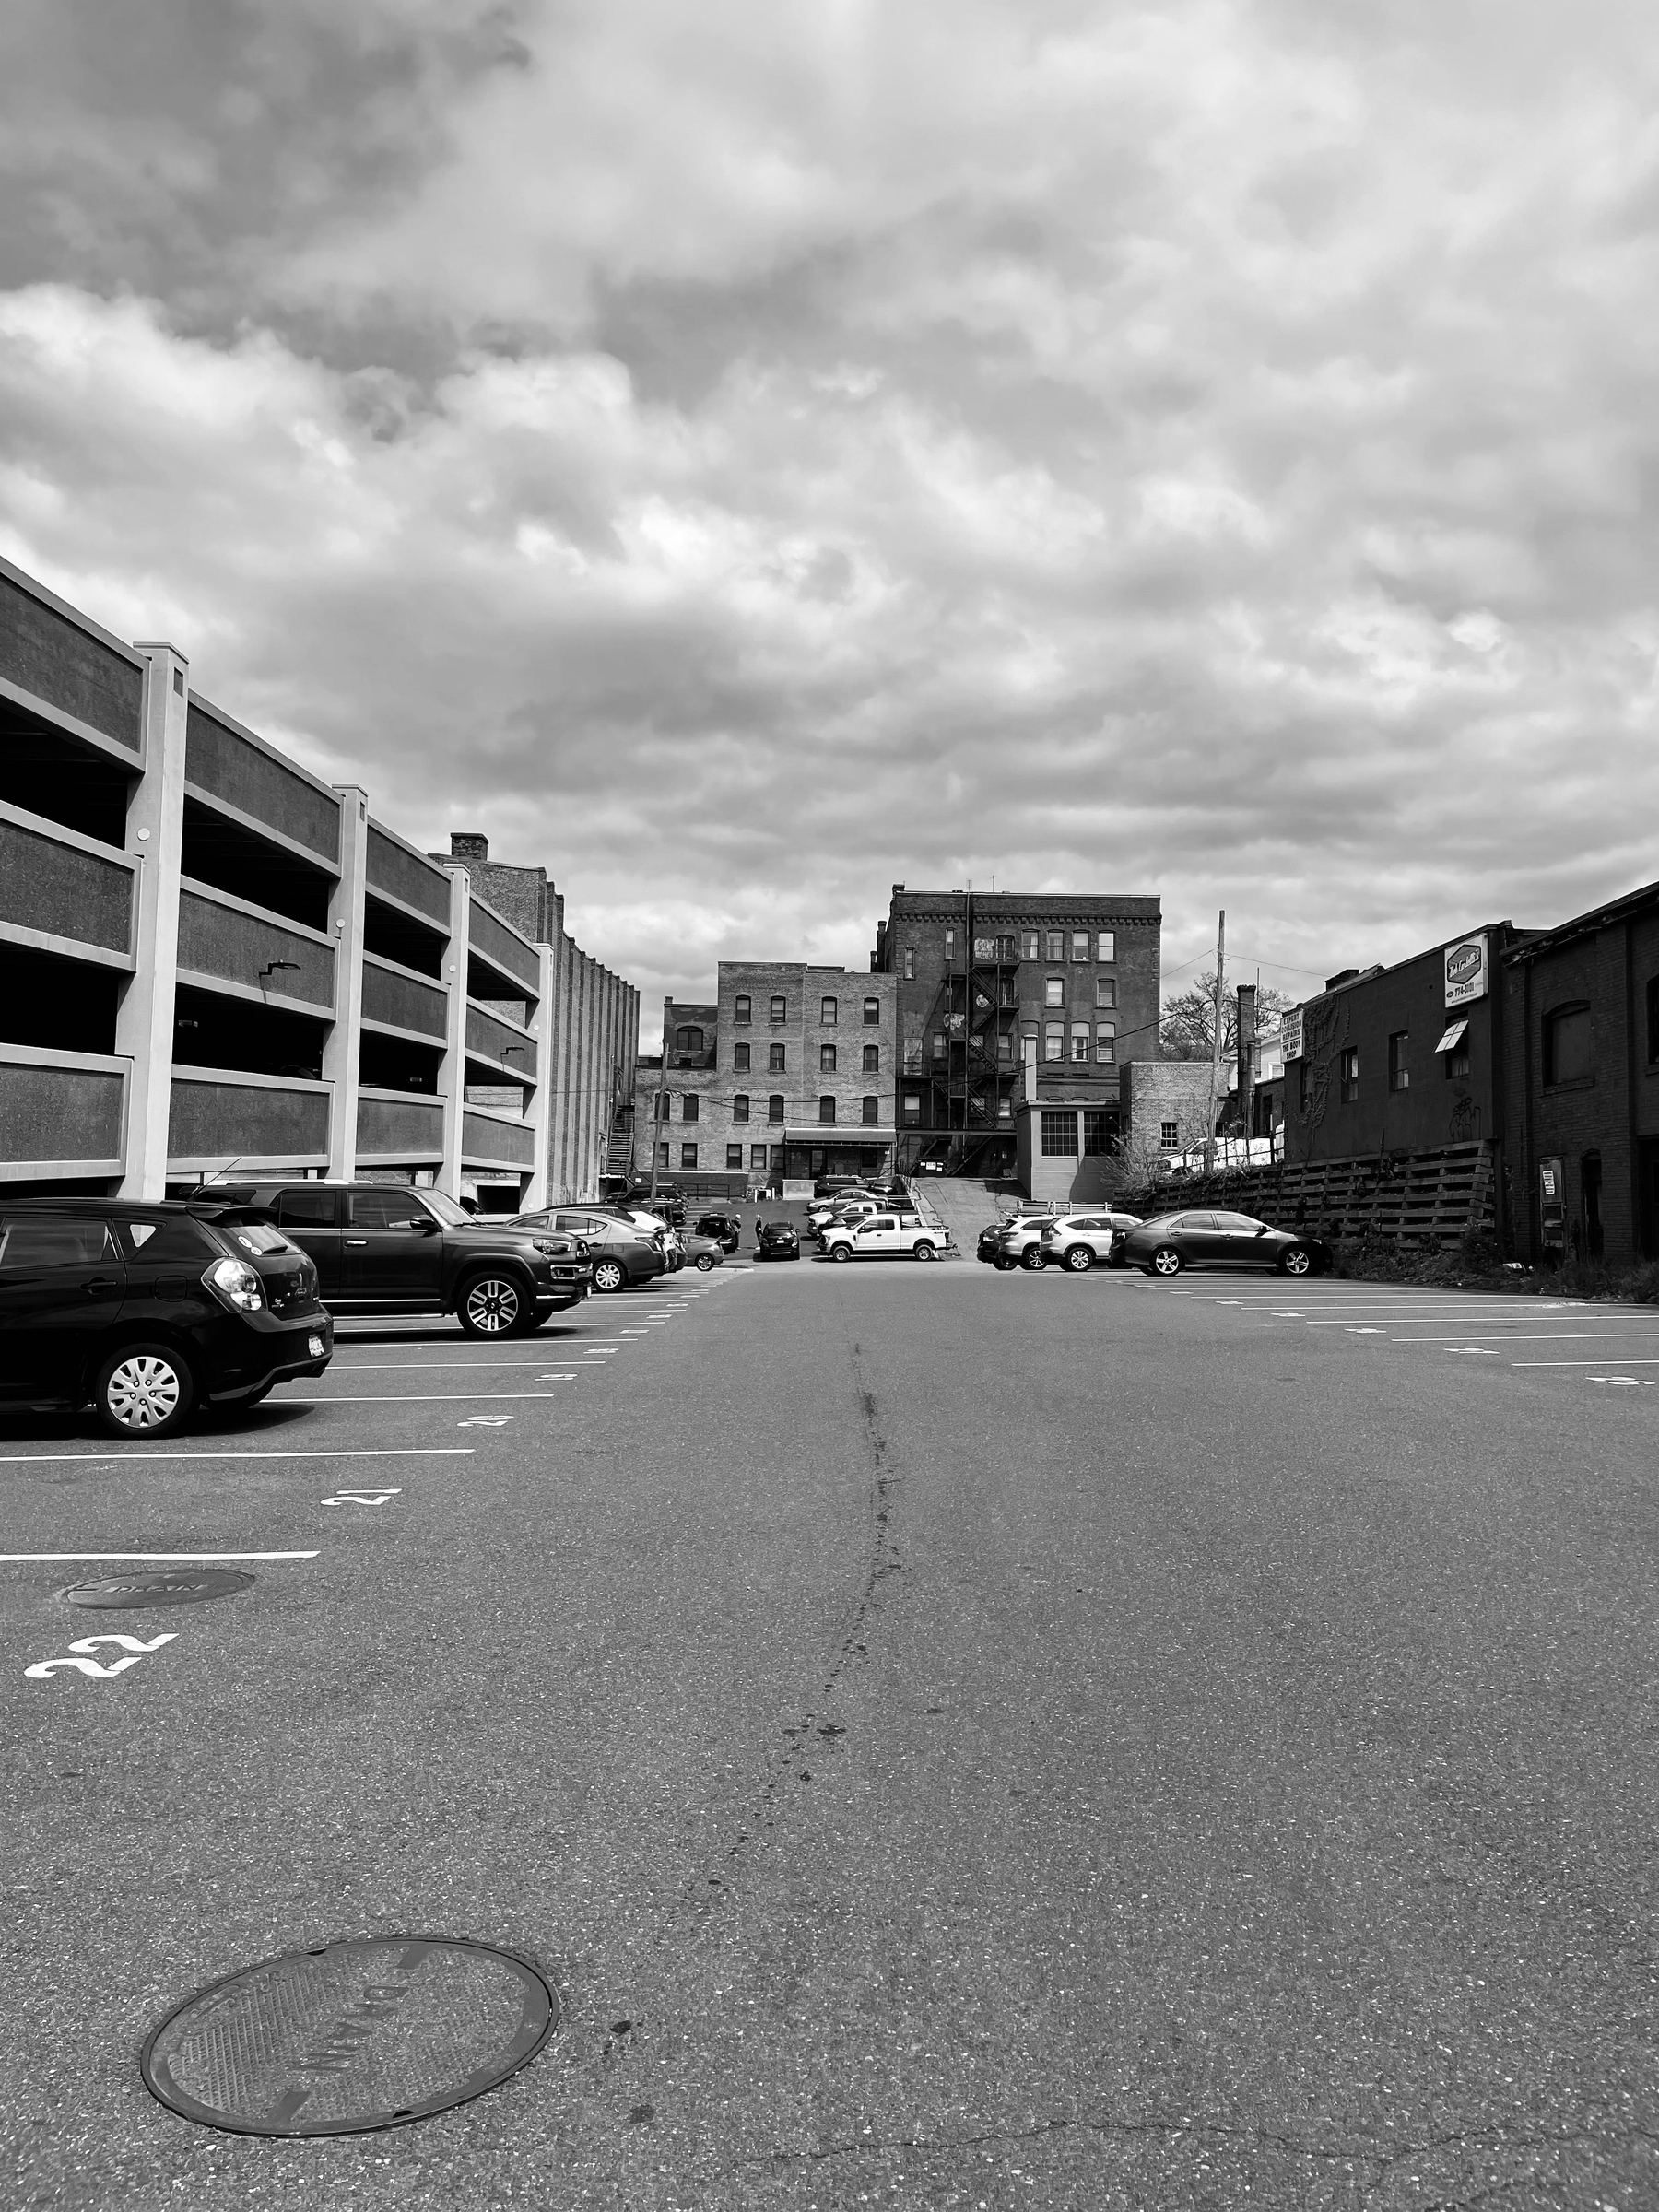 Parking lot at buildings 